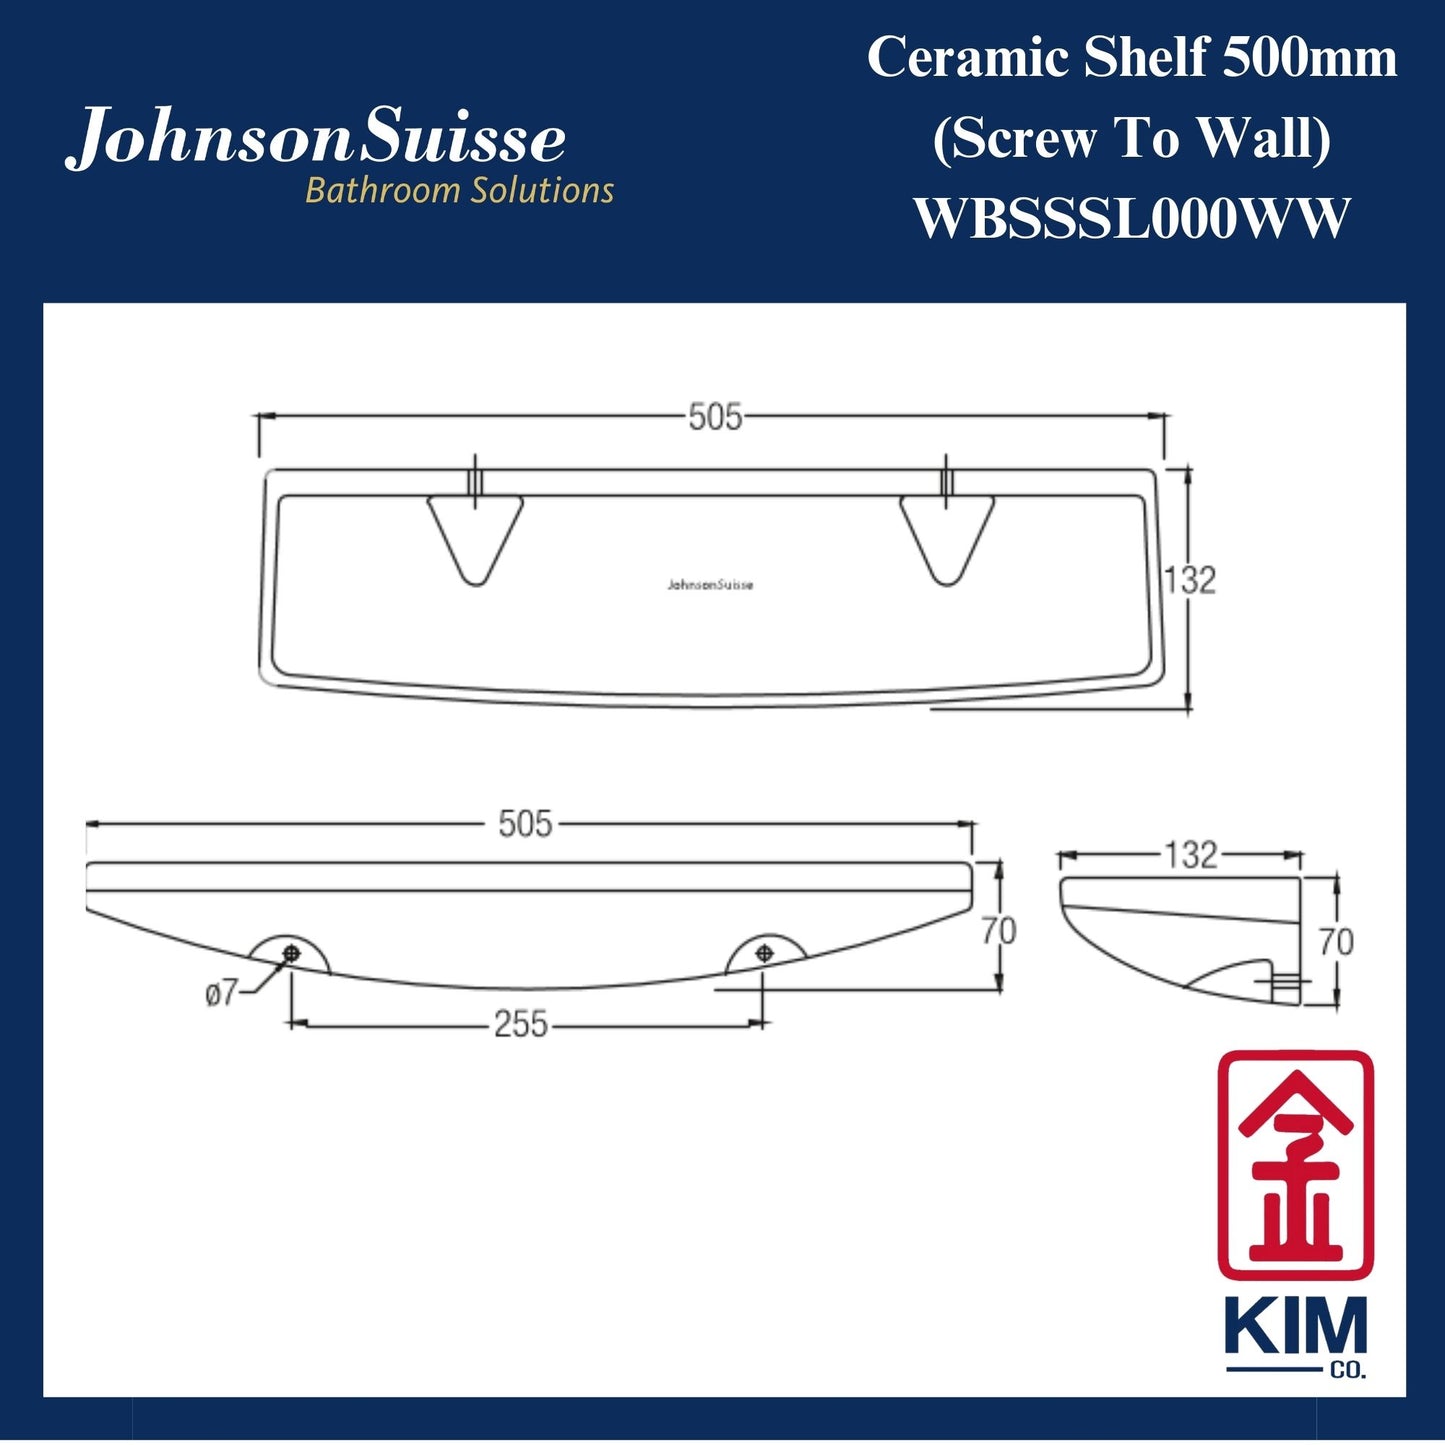 Johnson Suisse Ceramic Screw To Wall Shelf 500mm (WBSSSL000WW)